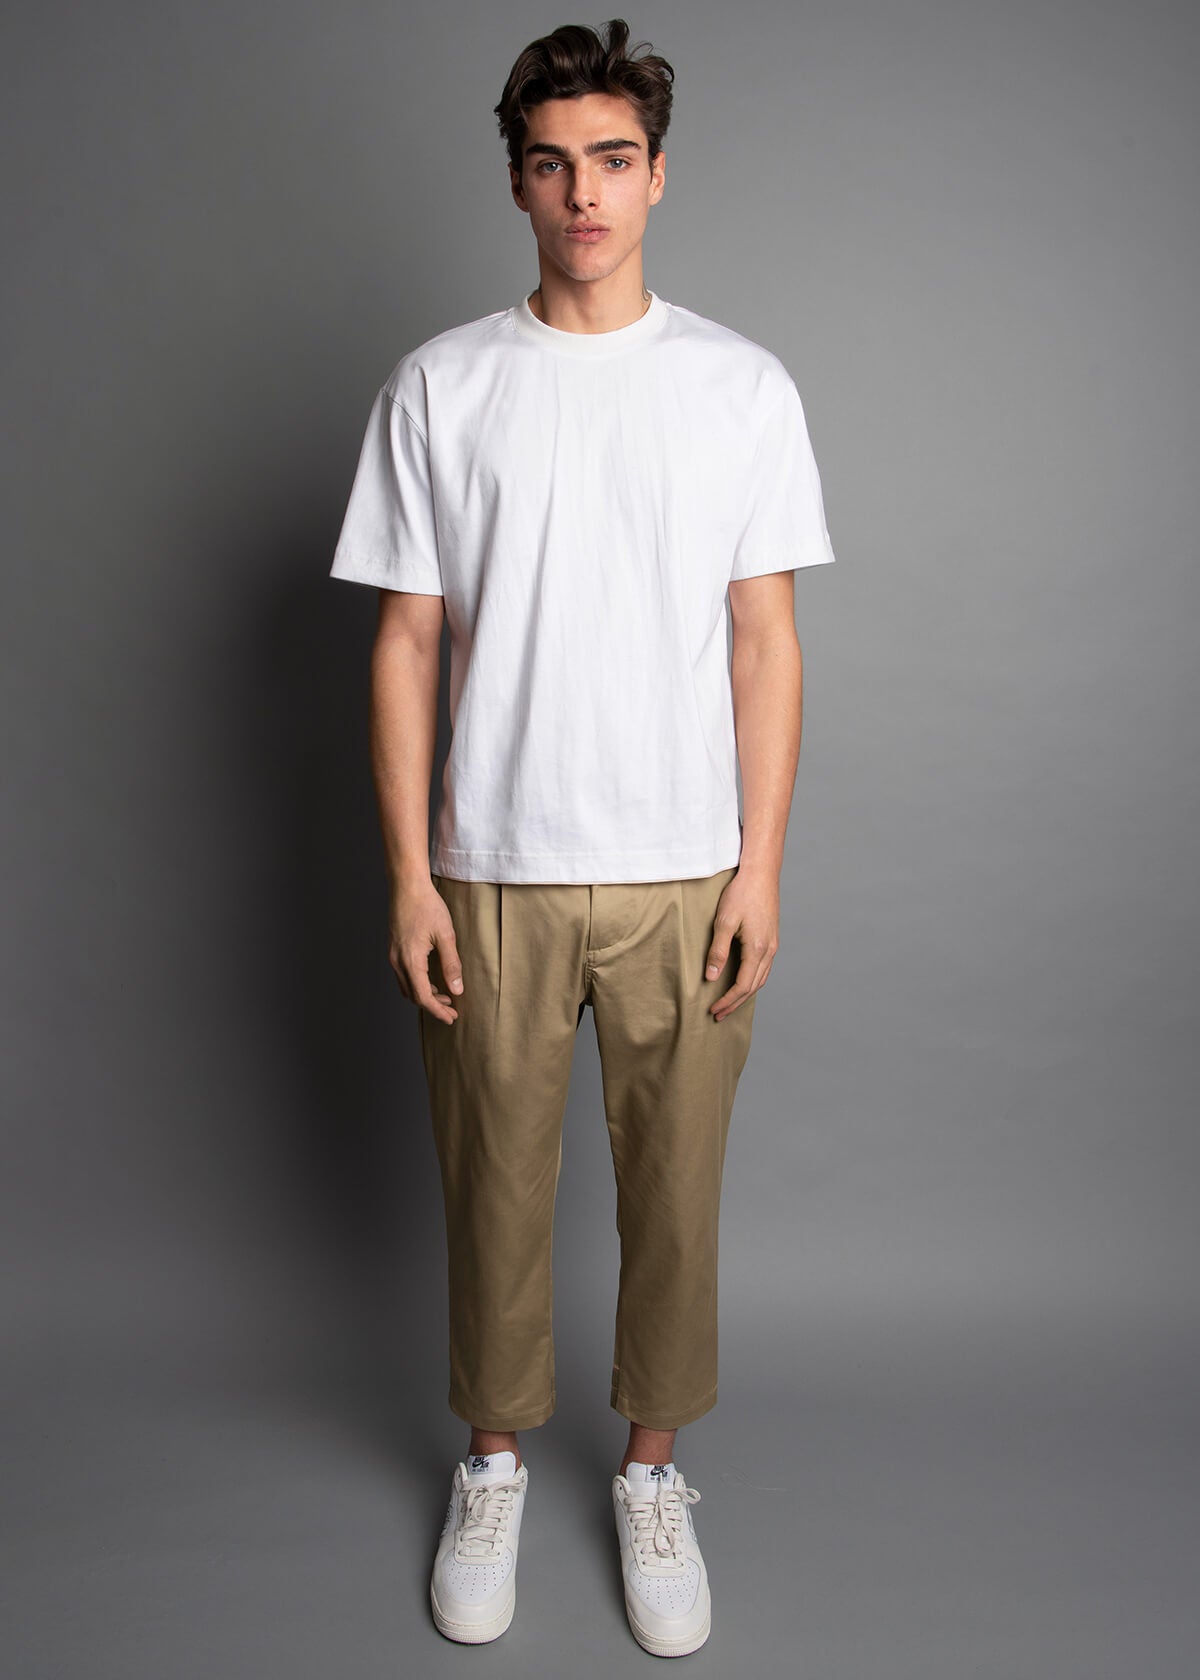 white cotton tshirt for men